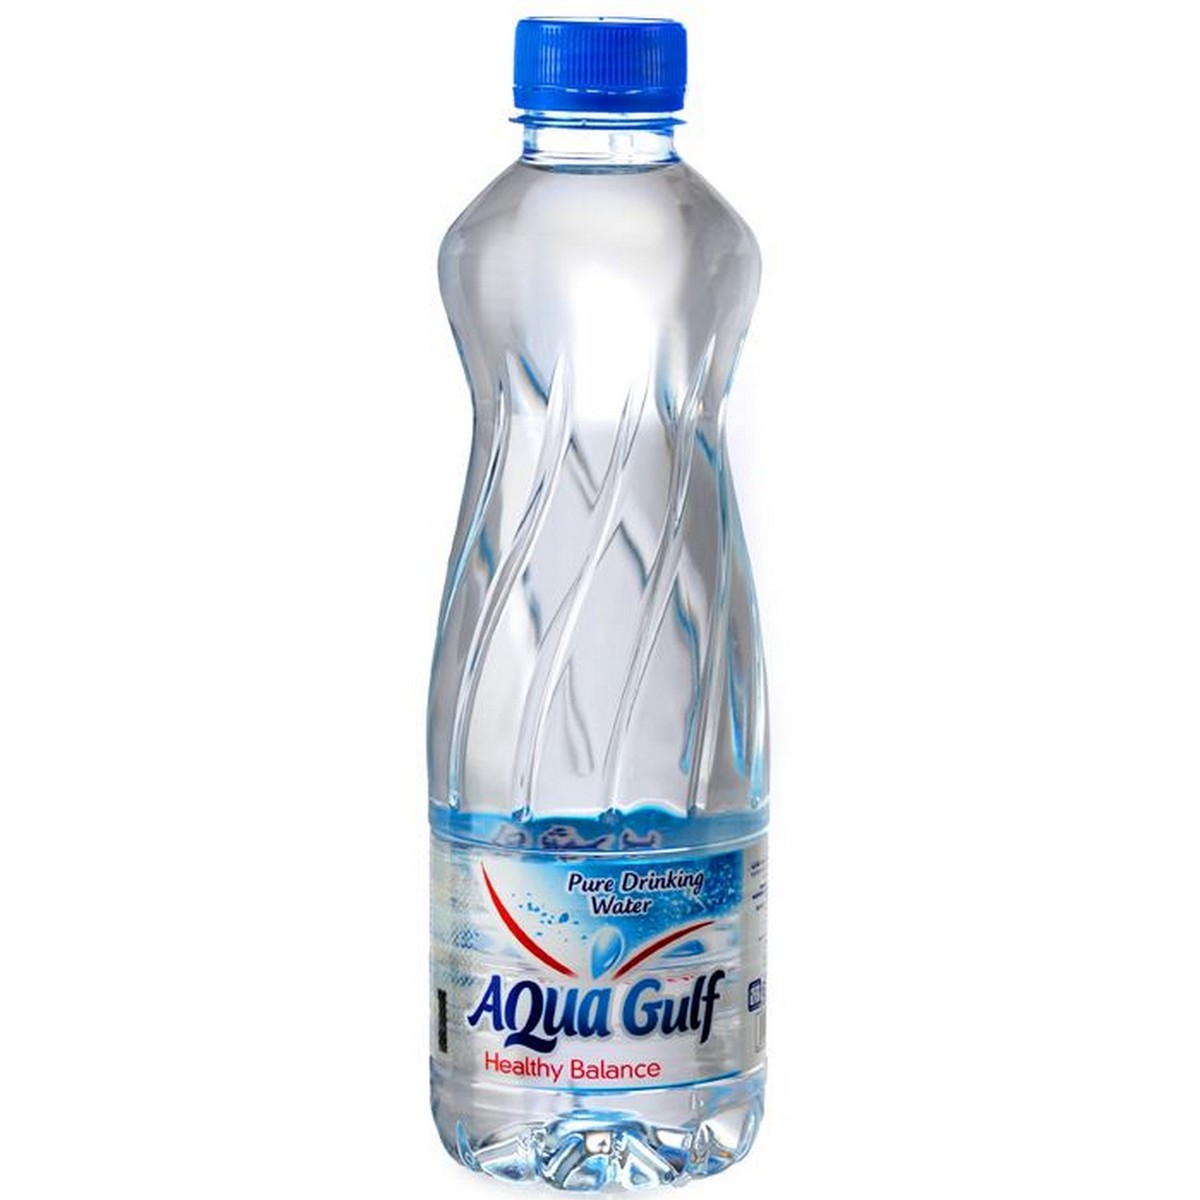 Aqua Gulf Drinking Water 500ml